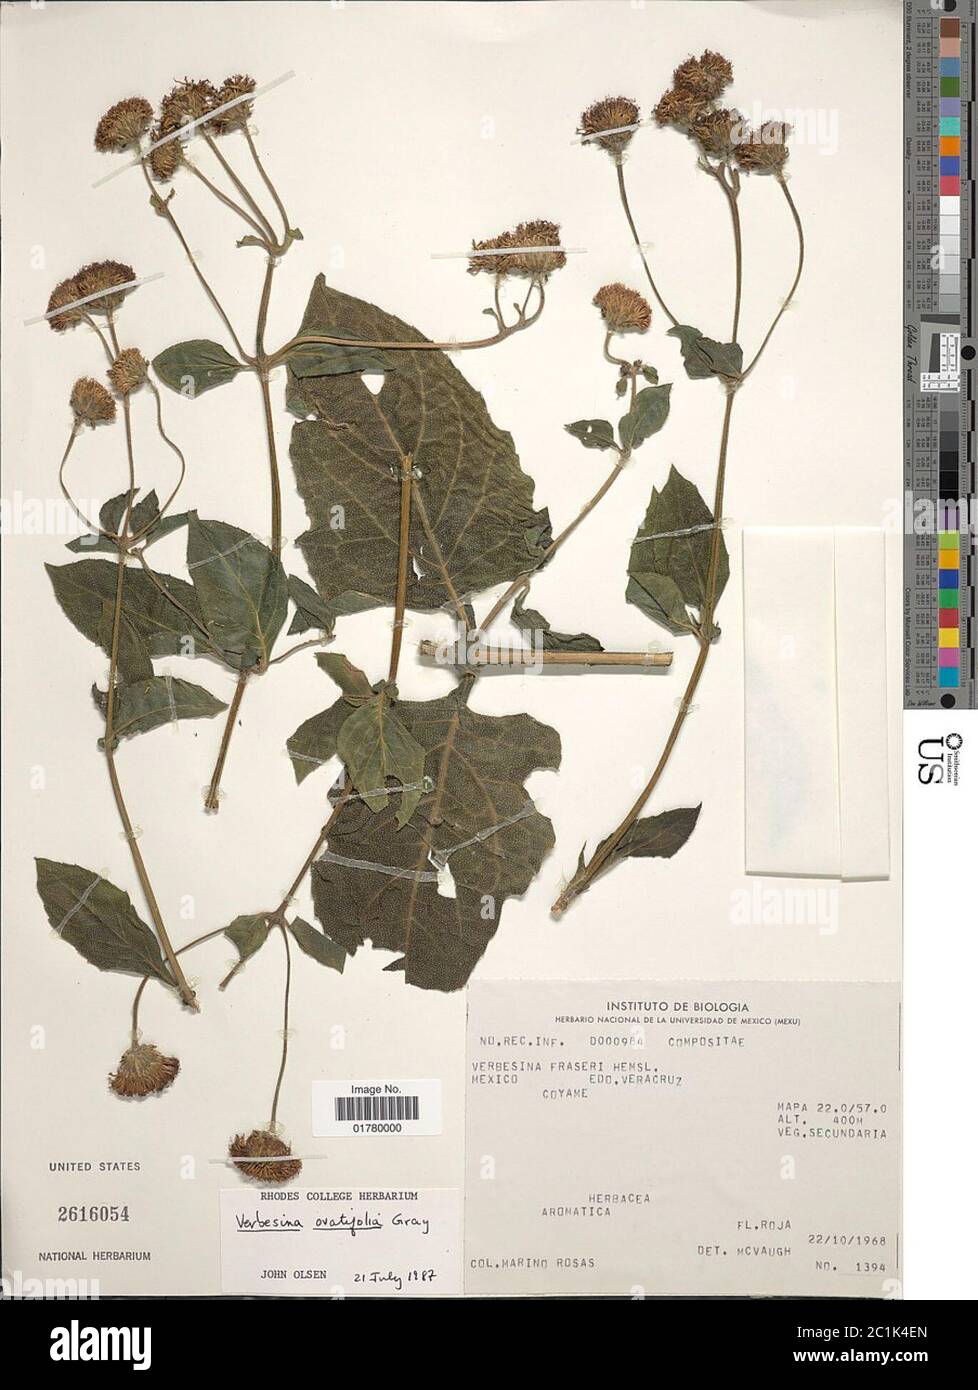 Verbesina ovatifolia A Gray ex Hemsl Verbesina ovatifolia A Gray ex Hemsl. Stock Photo